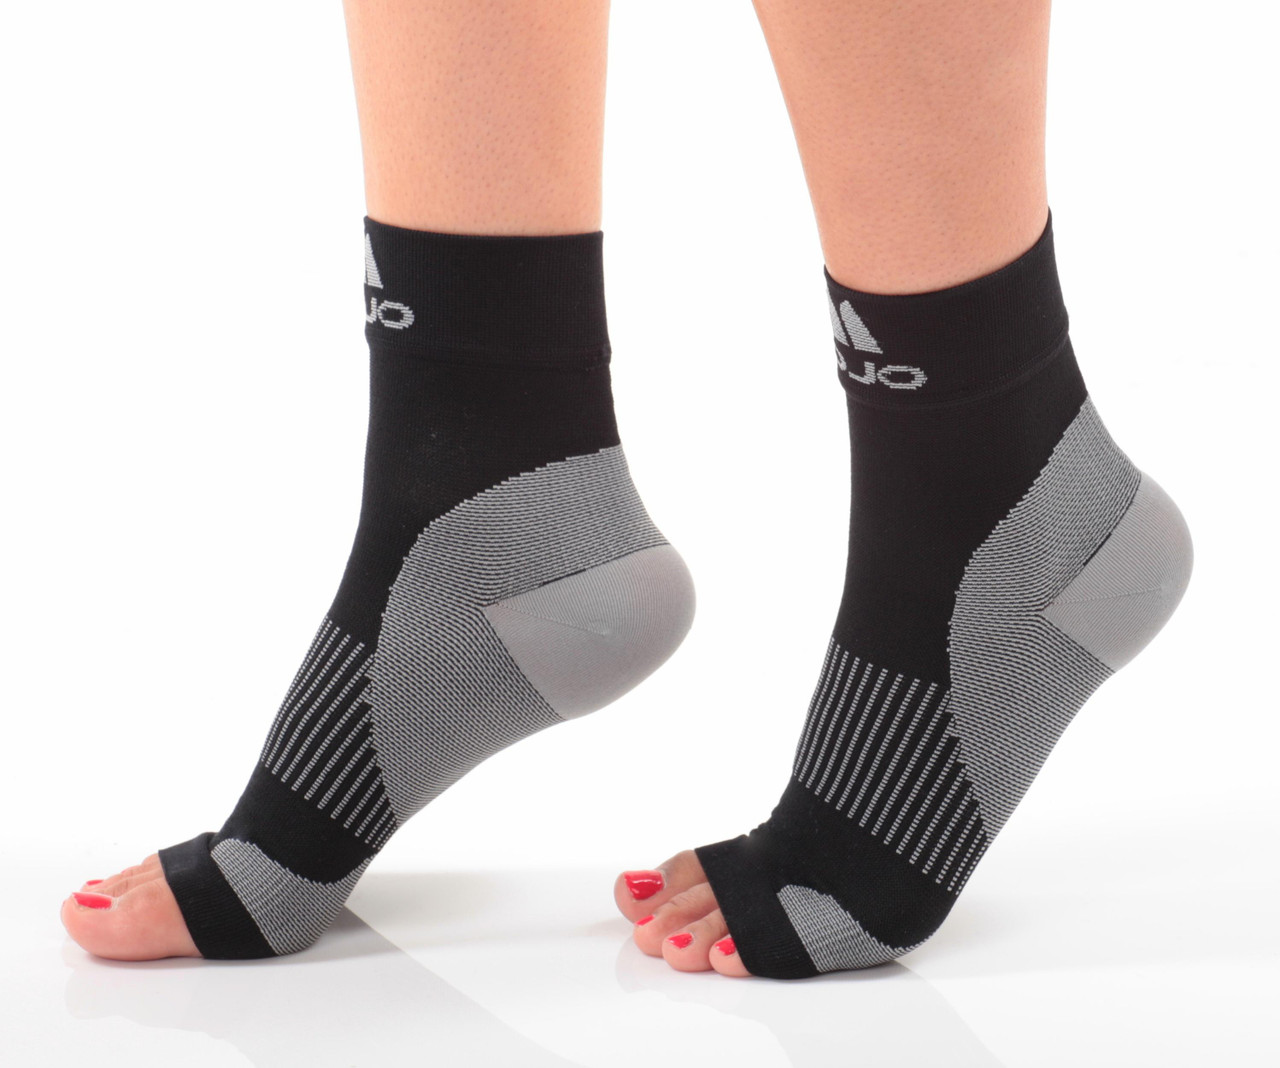  Modetro Plantar Fasciitis Socks - Ankle Compression